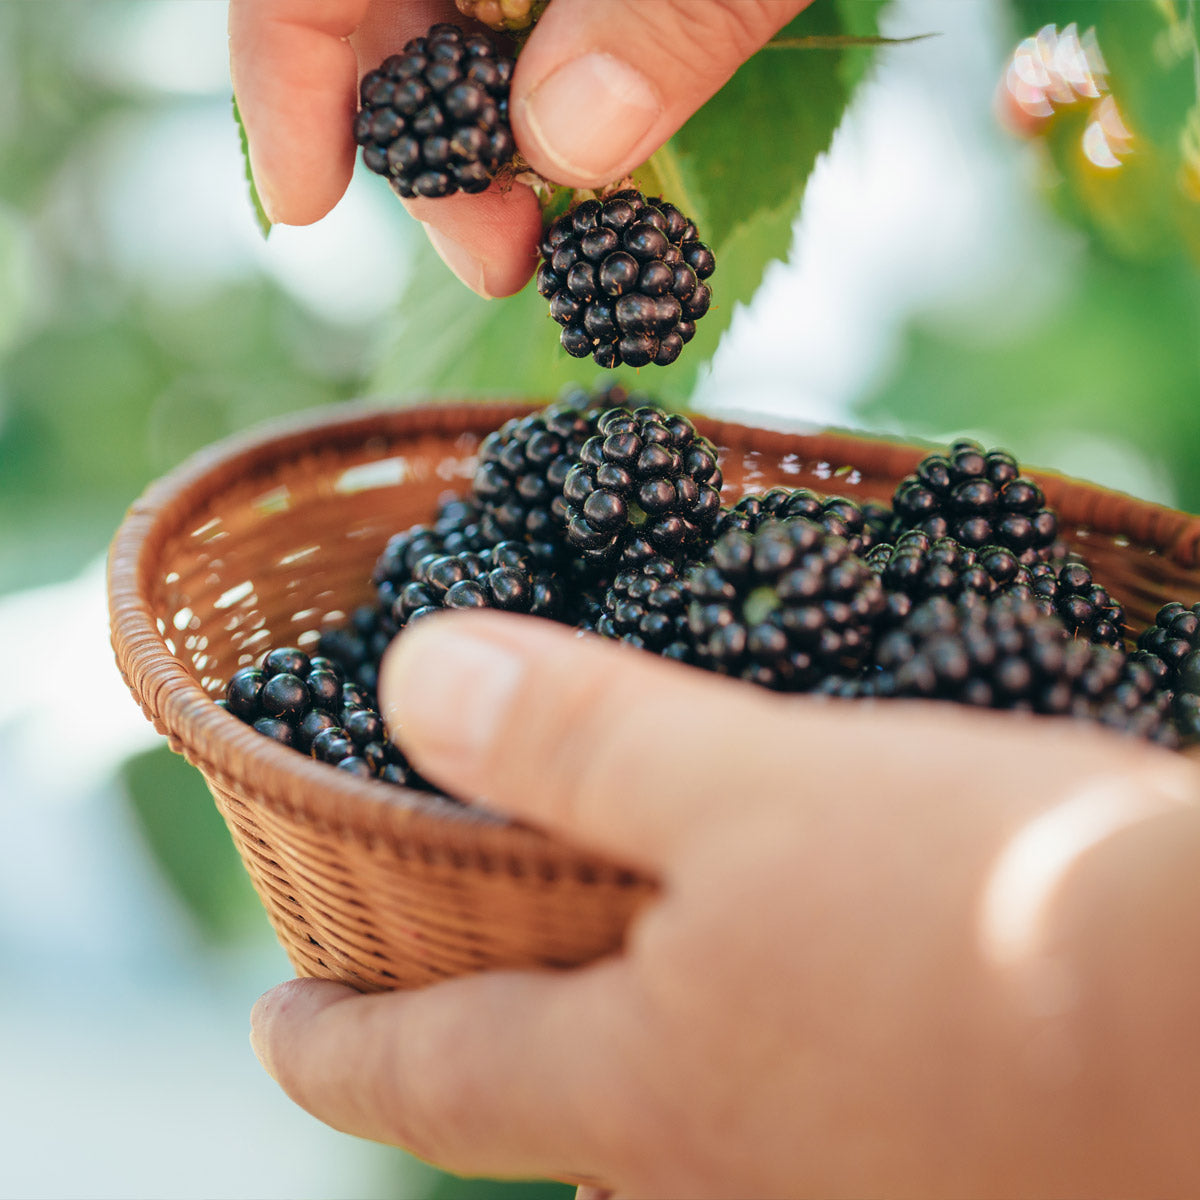 Picking ripe blackberries